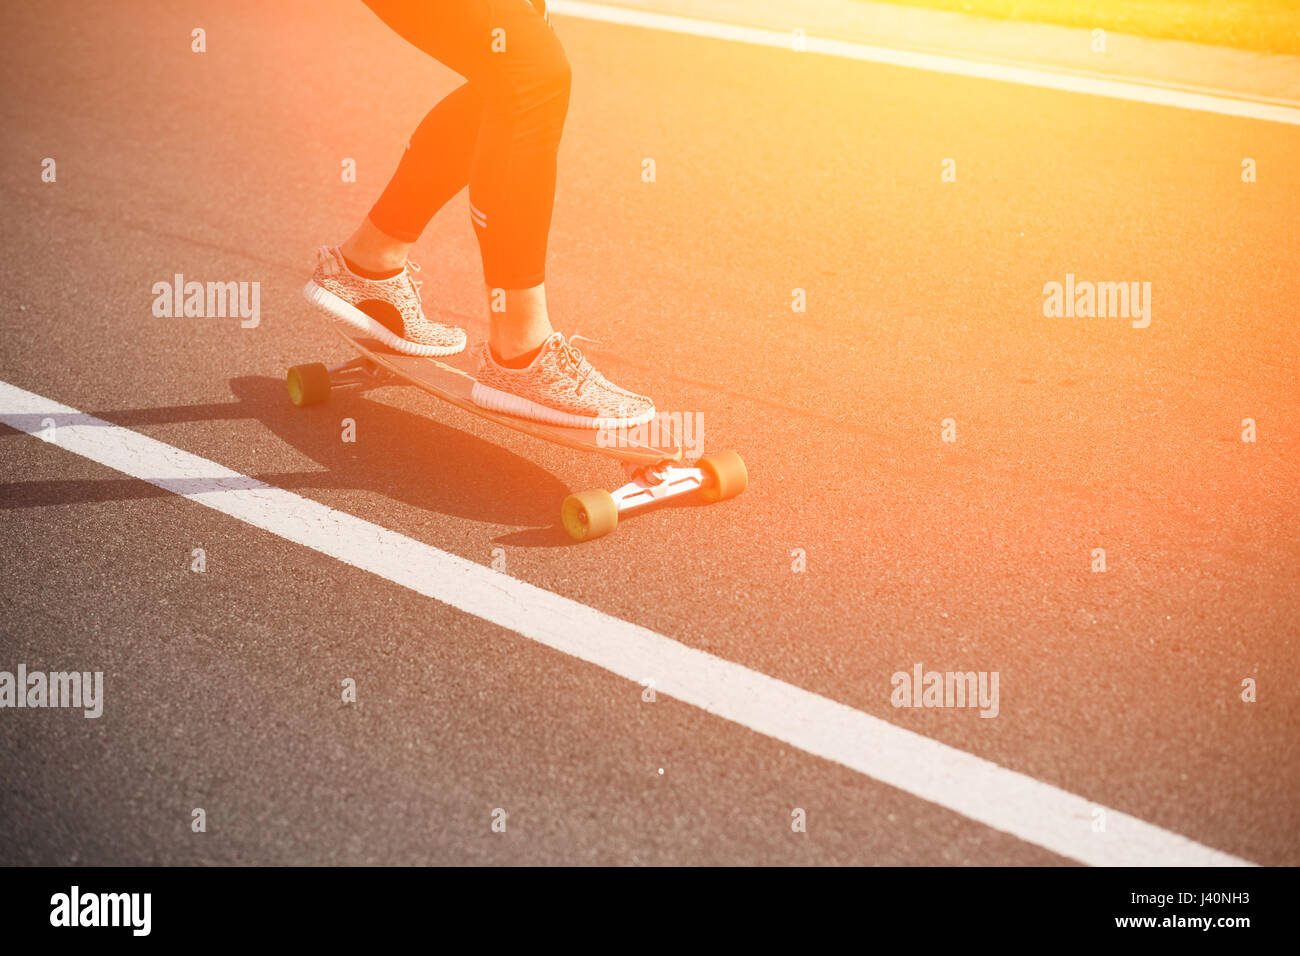 Man on skateboard or longboard Stock Photo